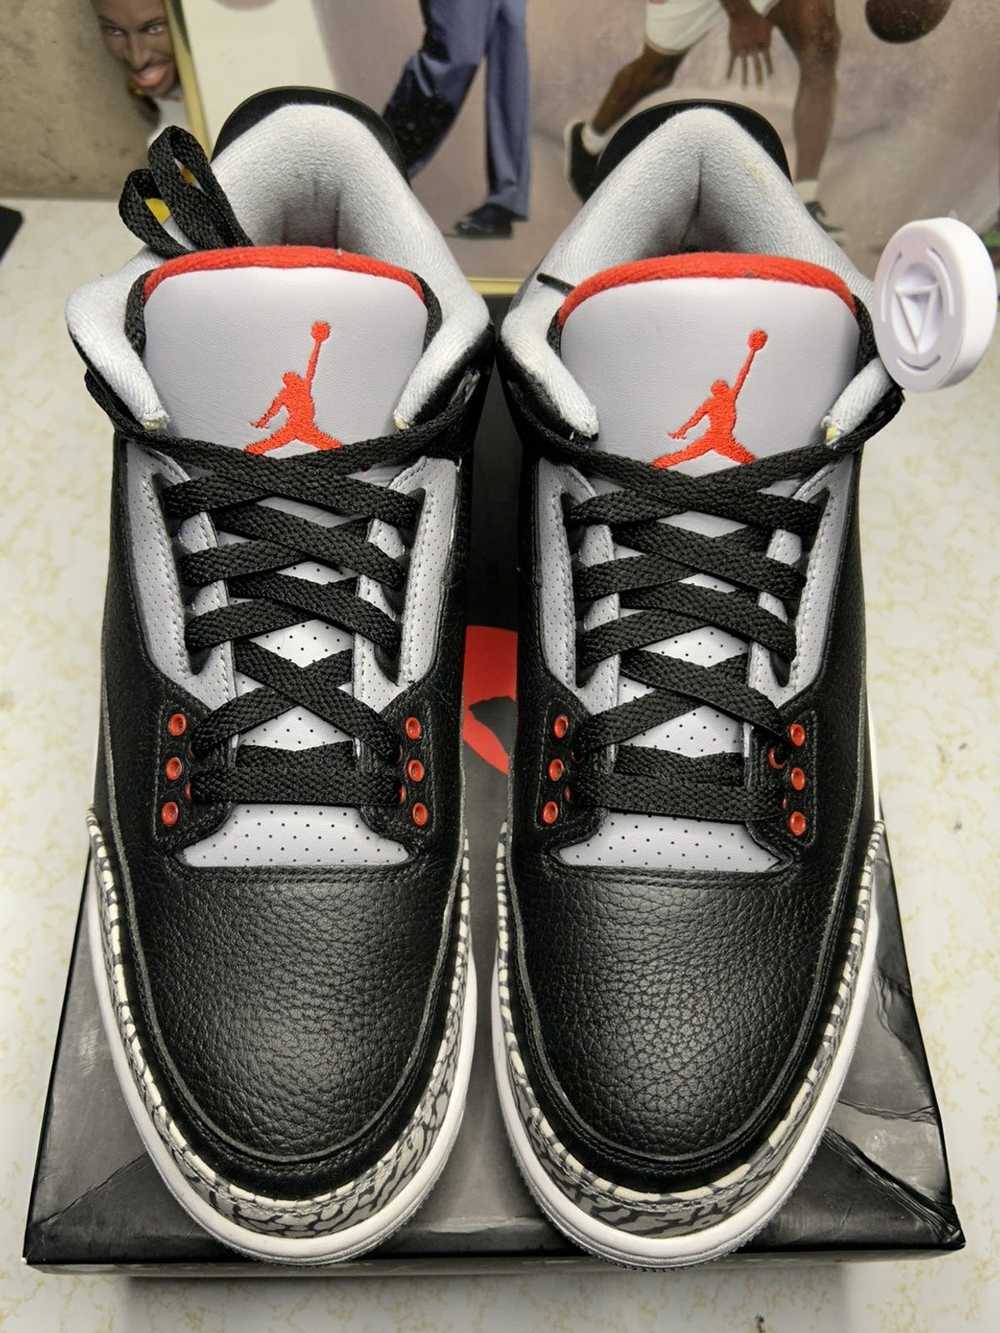 Jordan Brand Jordan Retro 3 “Black Cement” - image 1